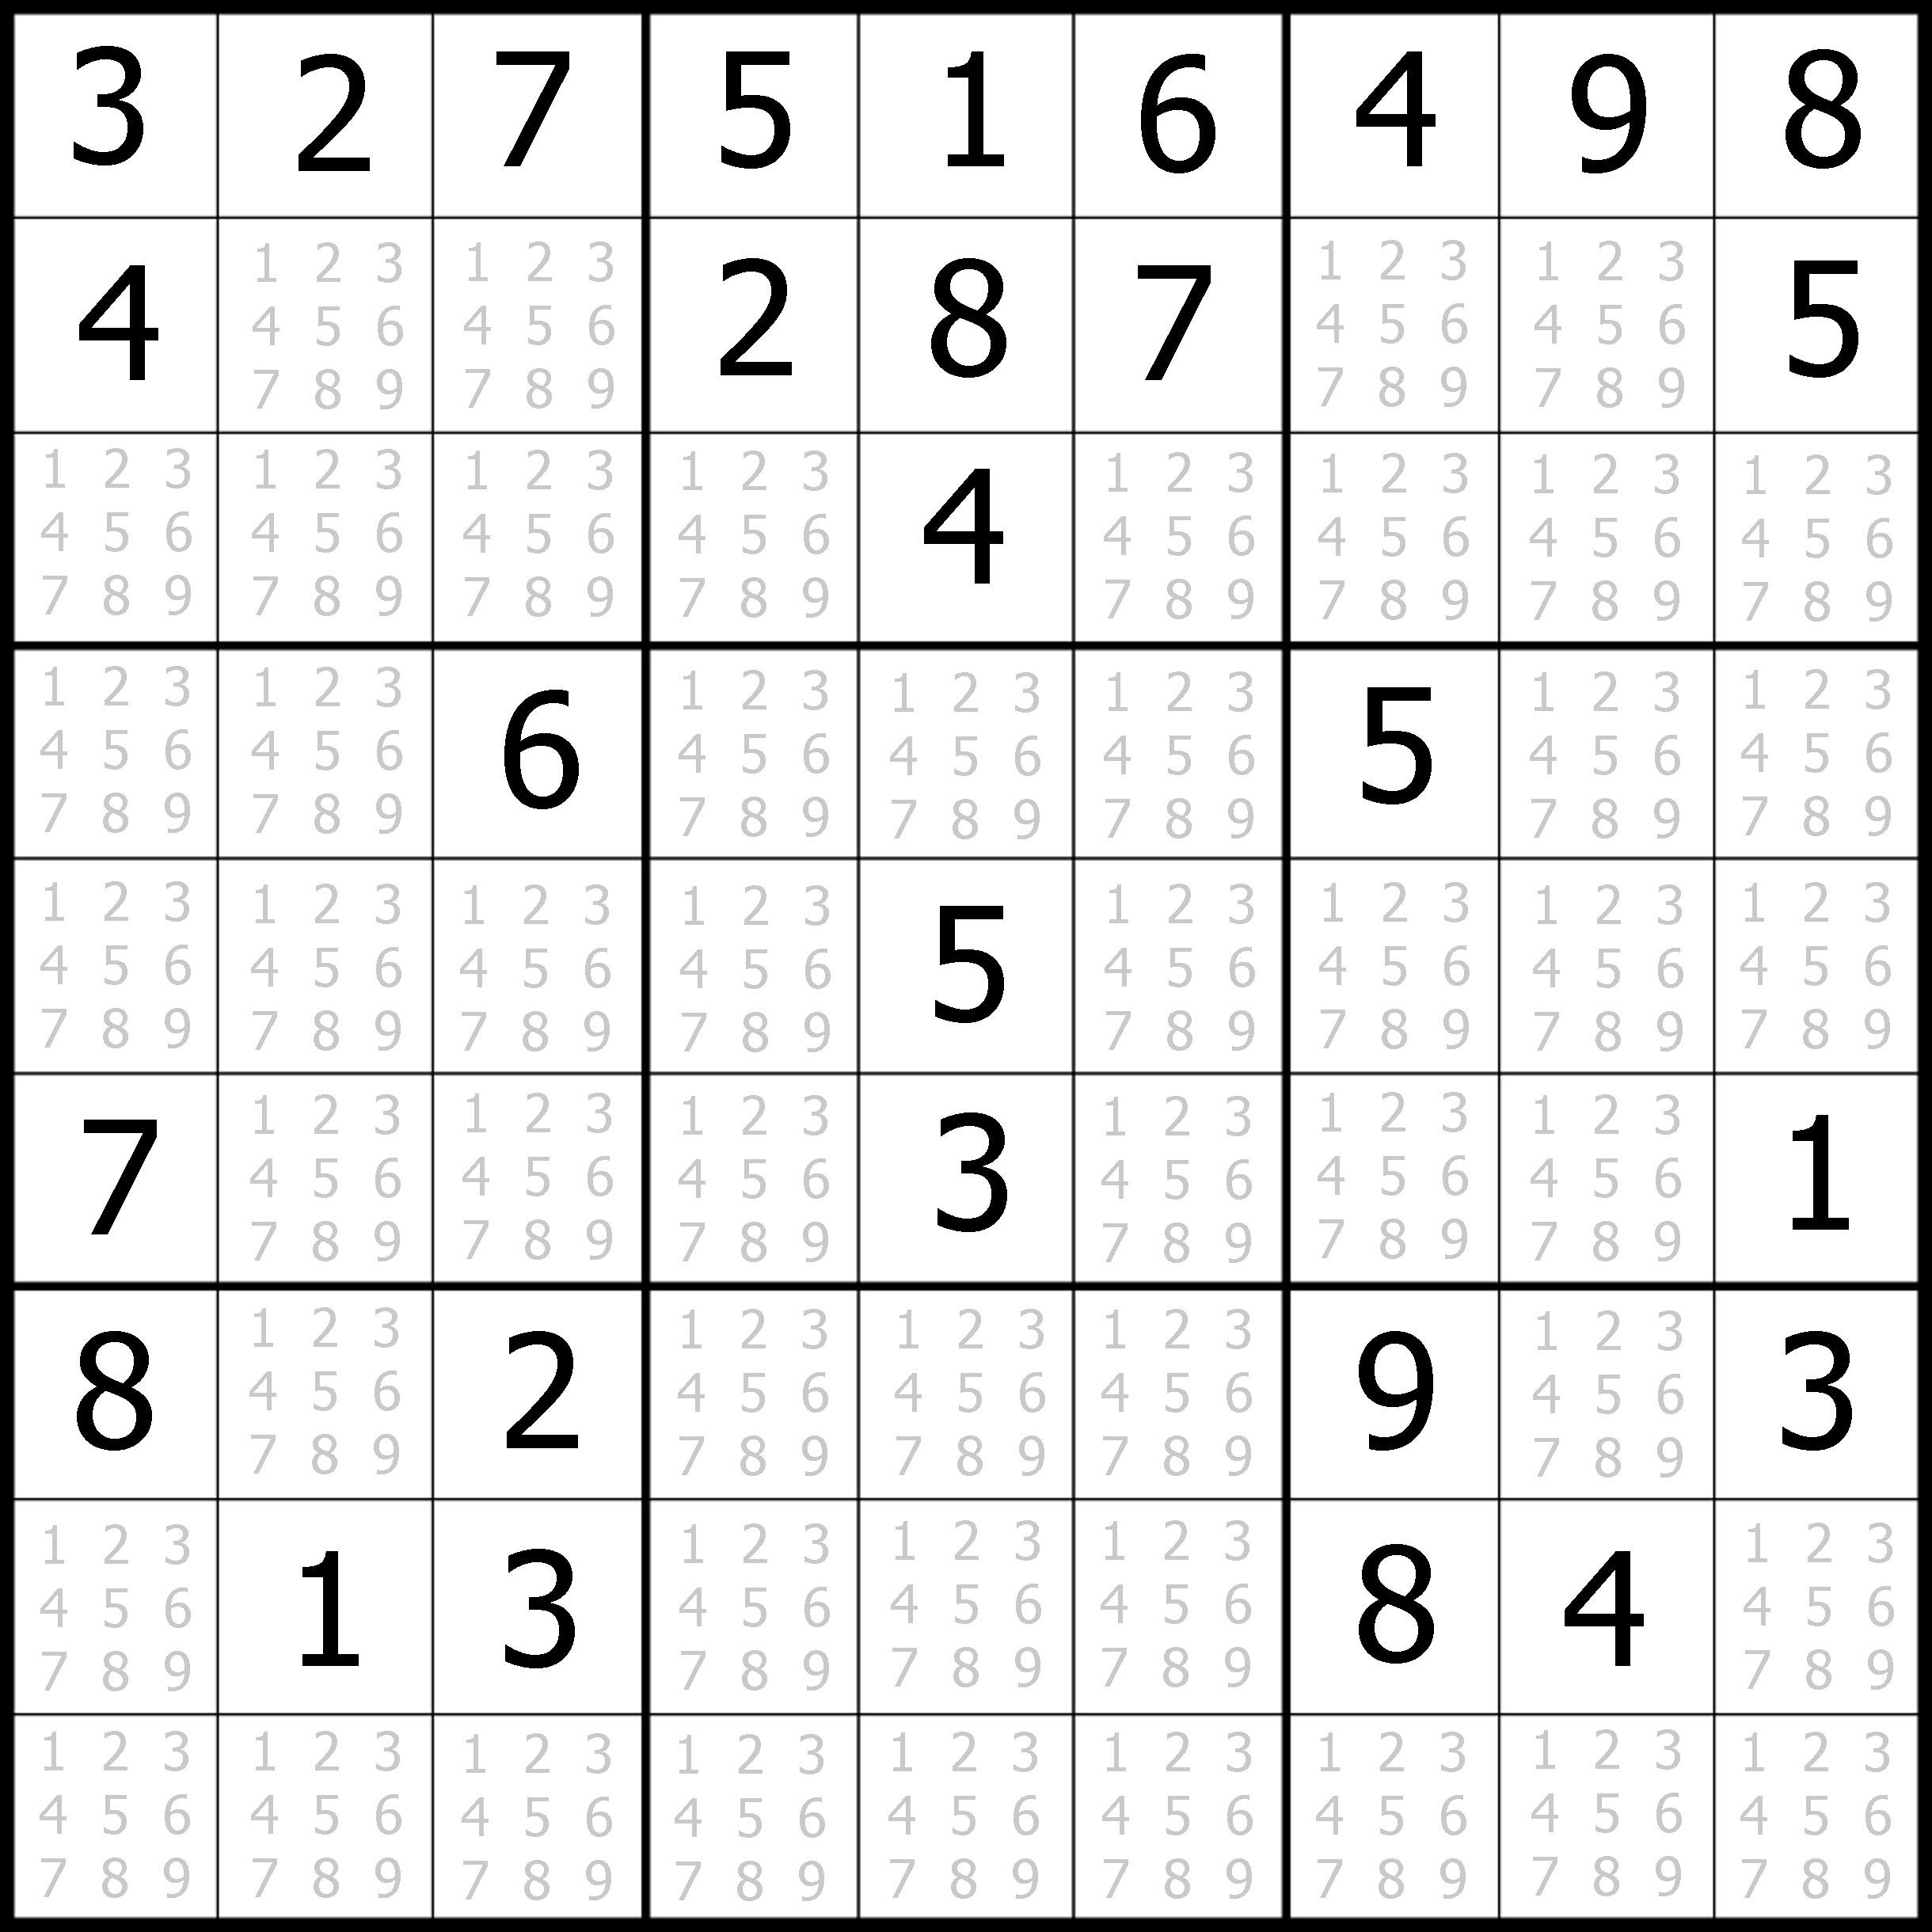 Download Printable Sudoku Puzzles Free